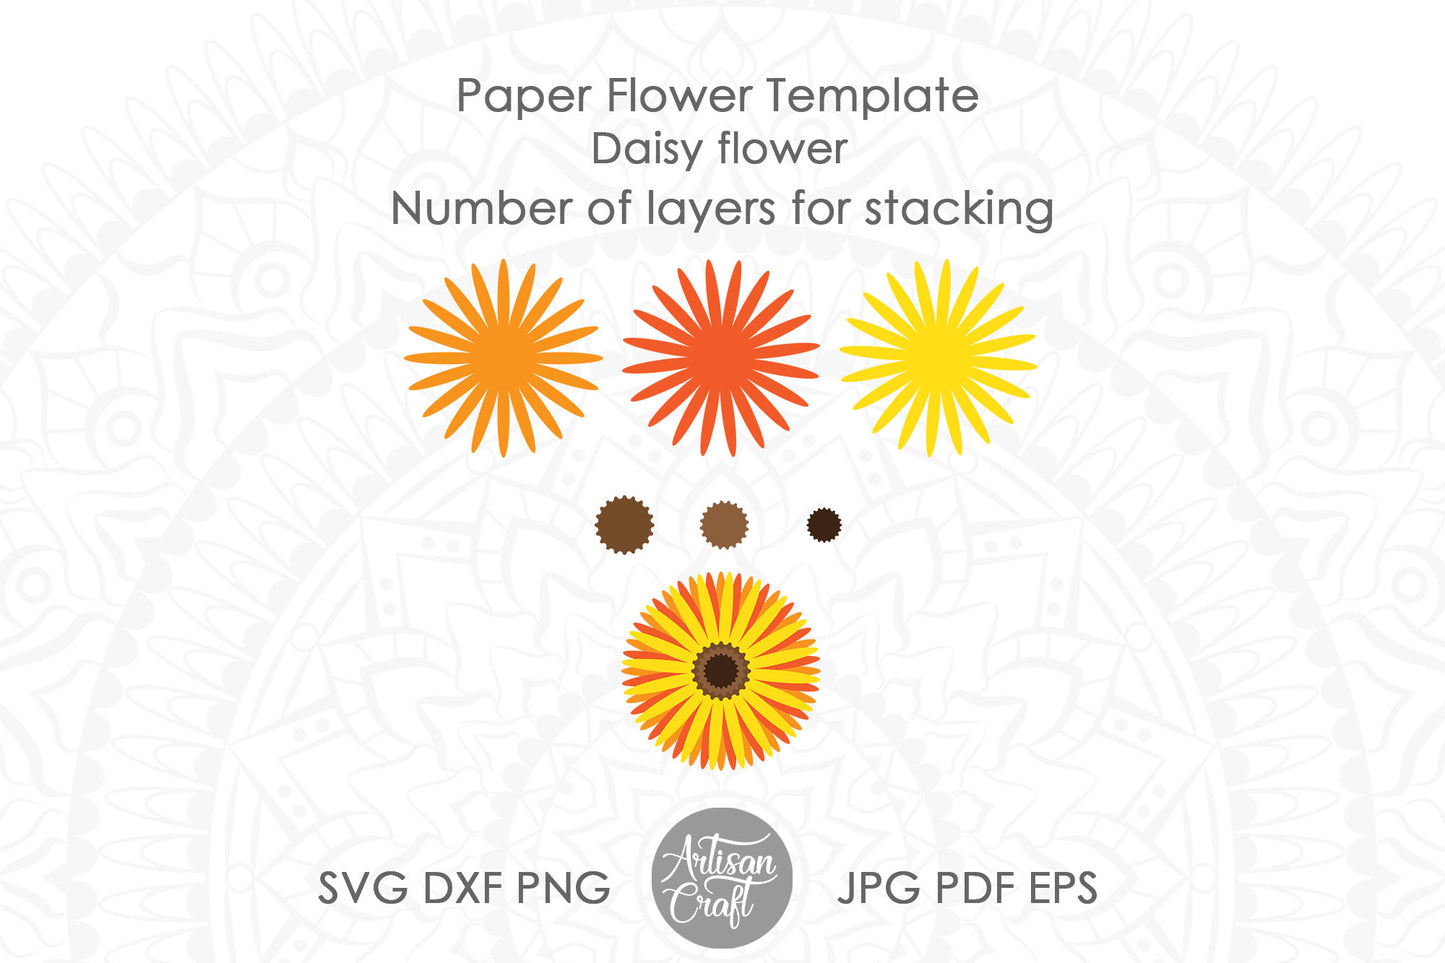 Daisy paper flower pattern SVG